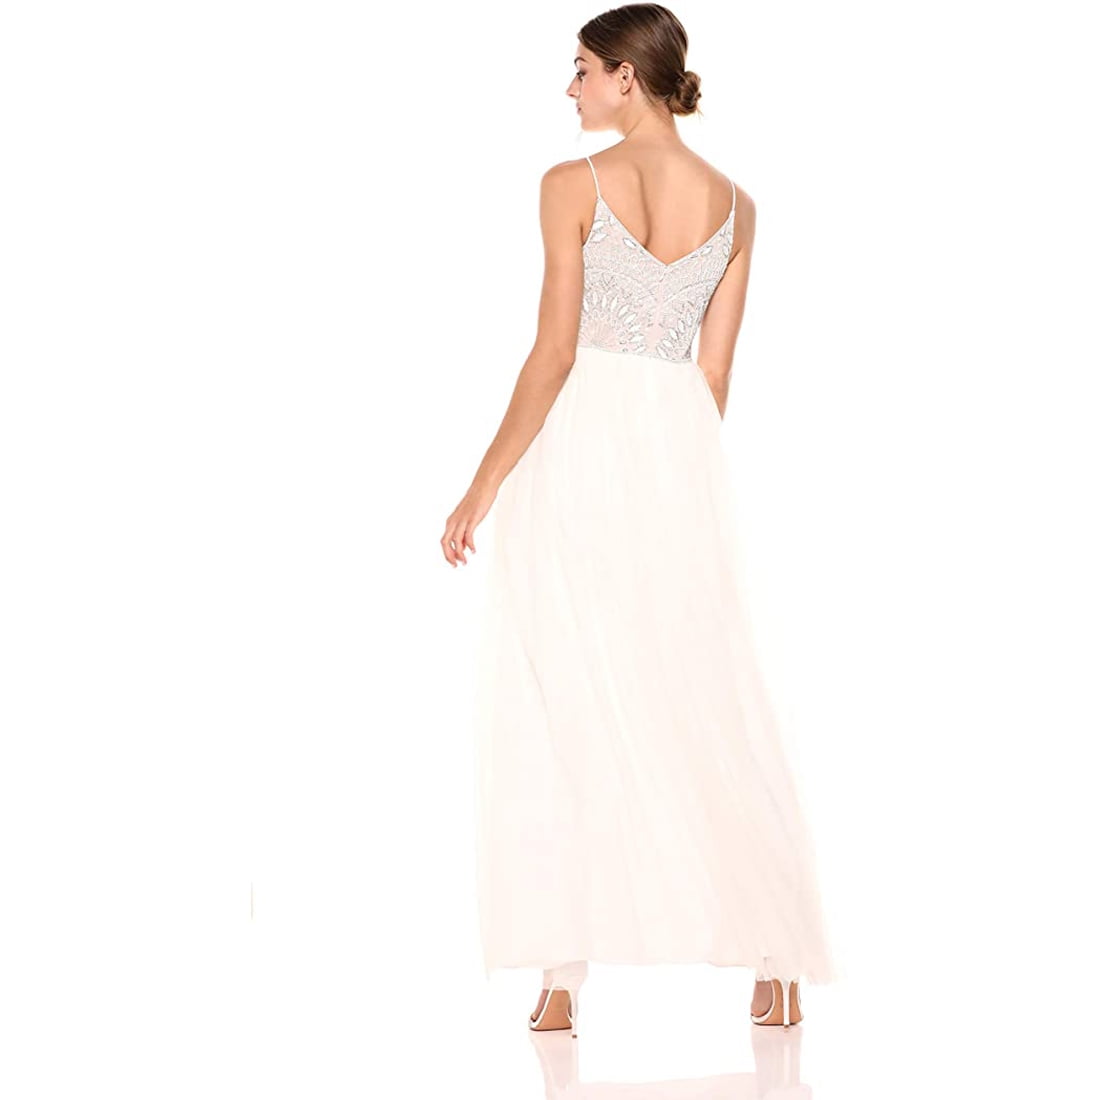 Adrianna Bodice Strap Mesh Bridal Dress, Ivory Nude,8 - Walmart.com